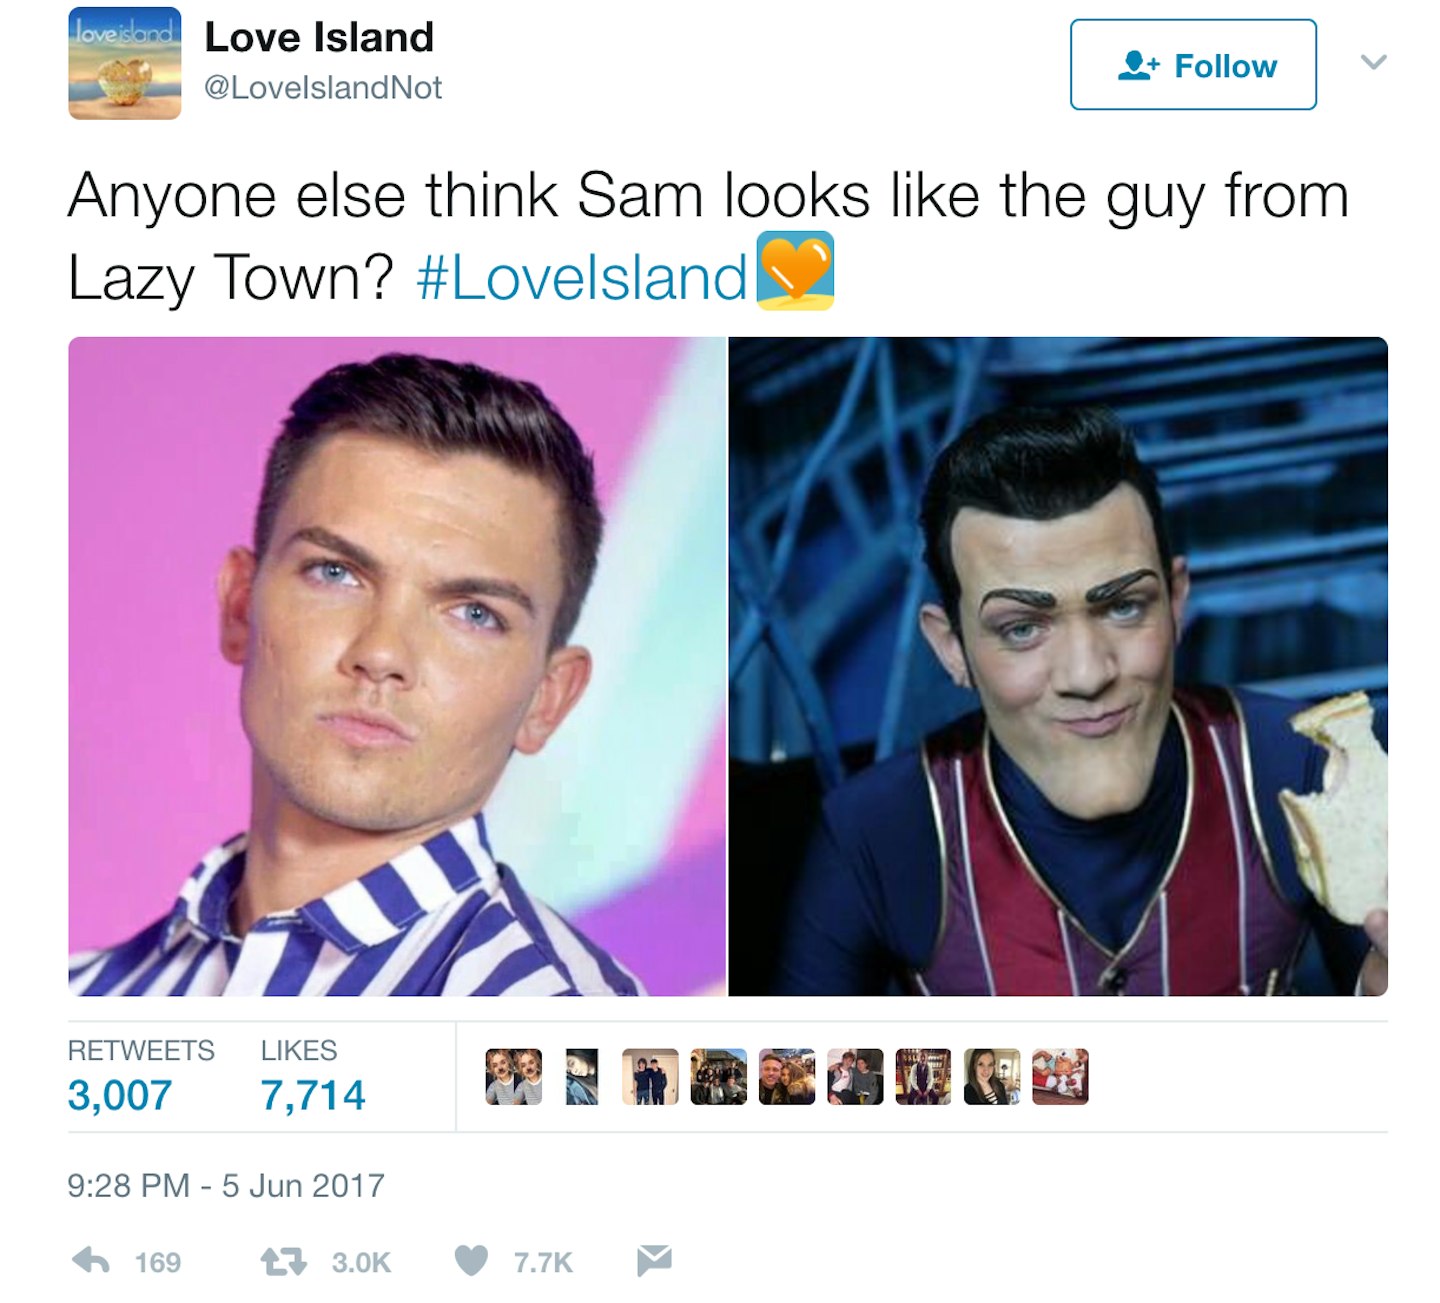 Love Island Twitter